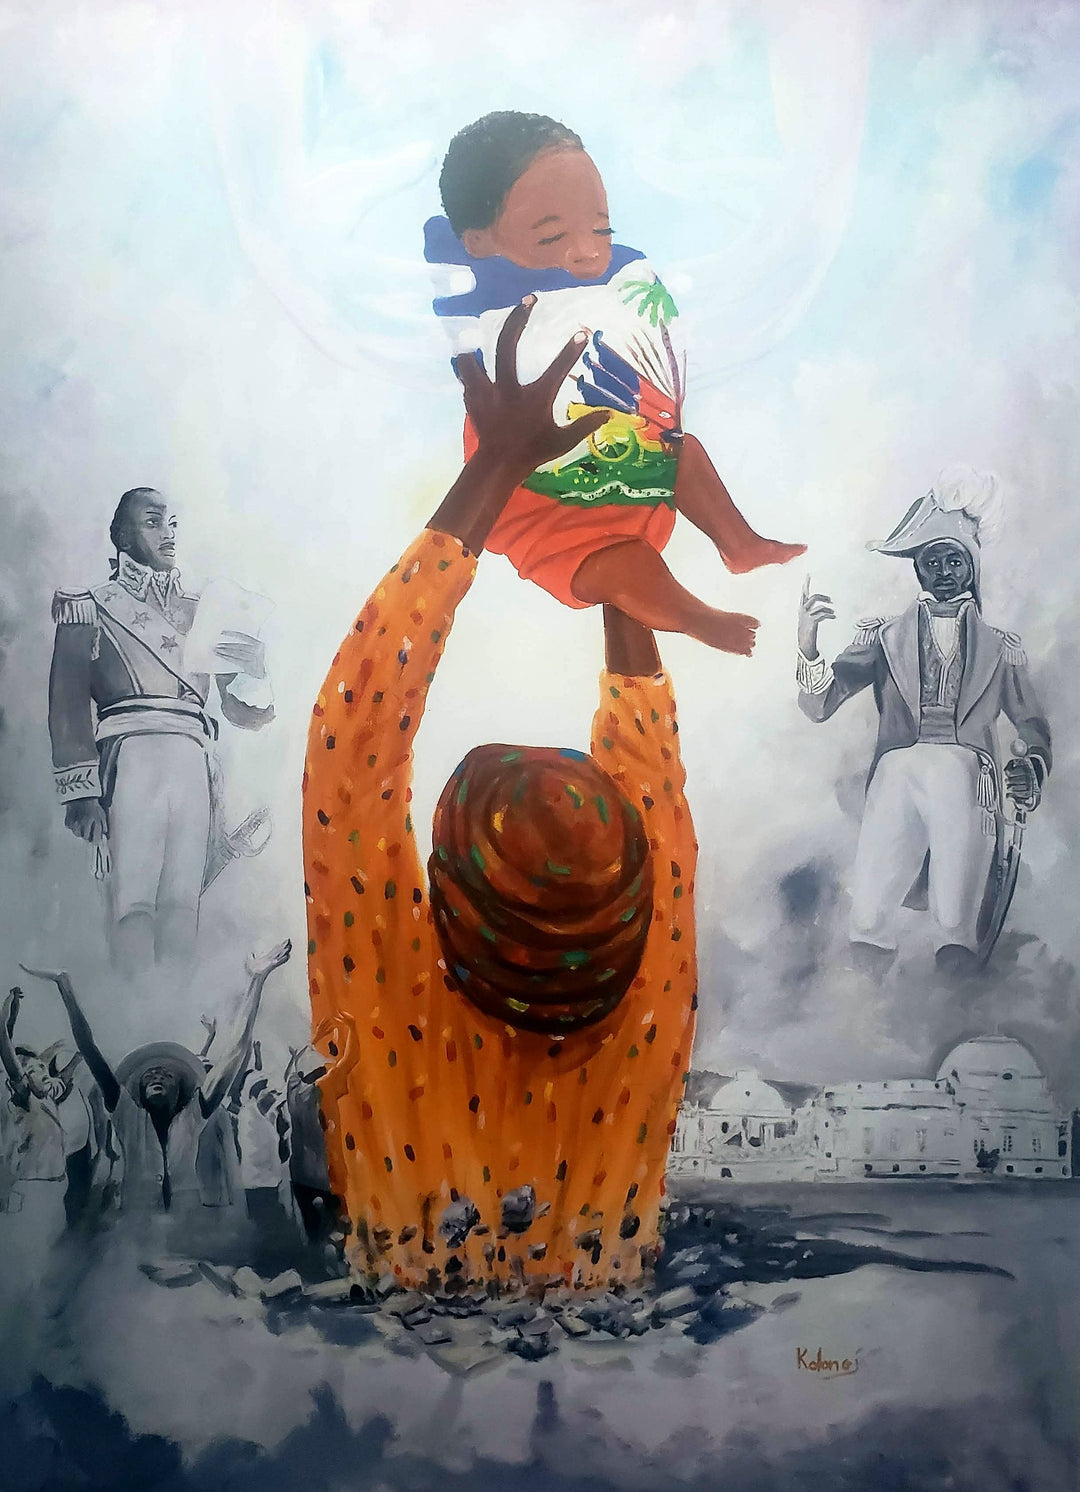 We Will Rise: A Tribute to the Haitian Spirit by Kolongi Brathwaite